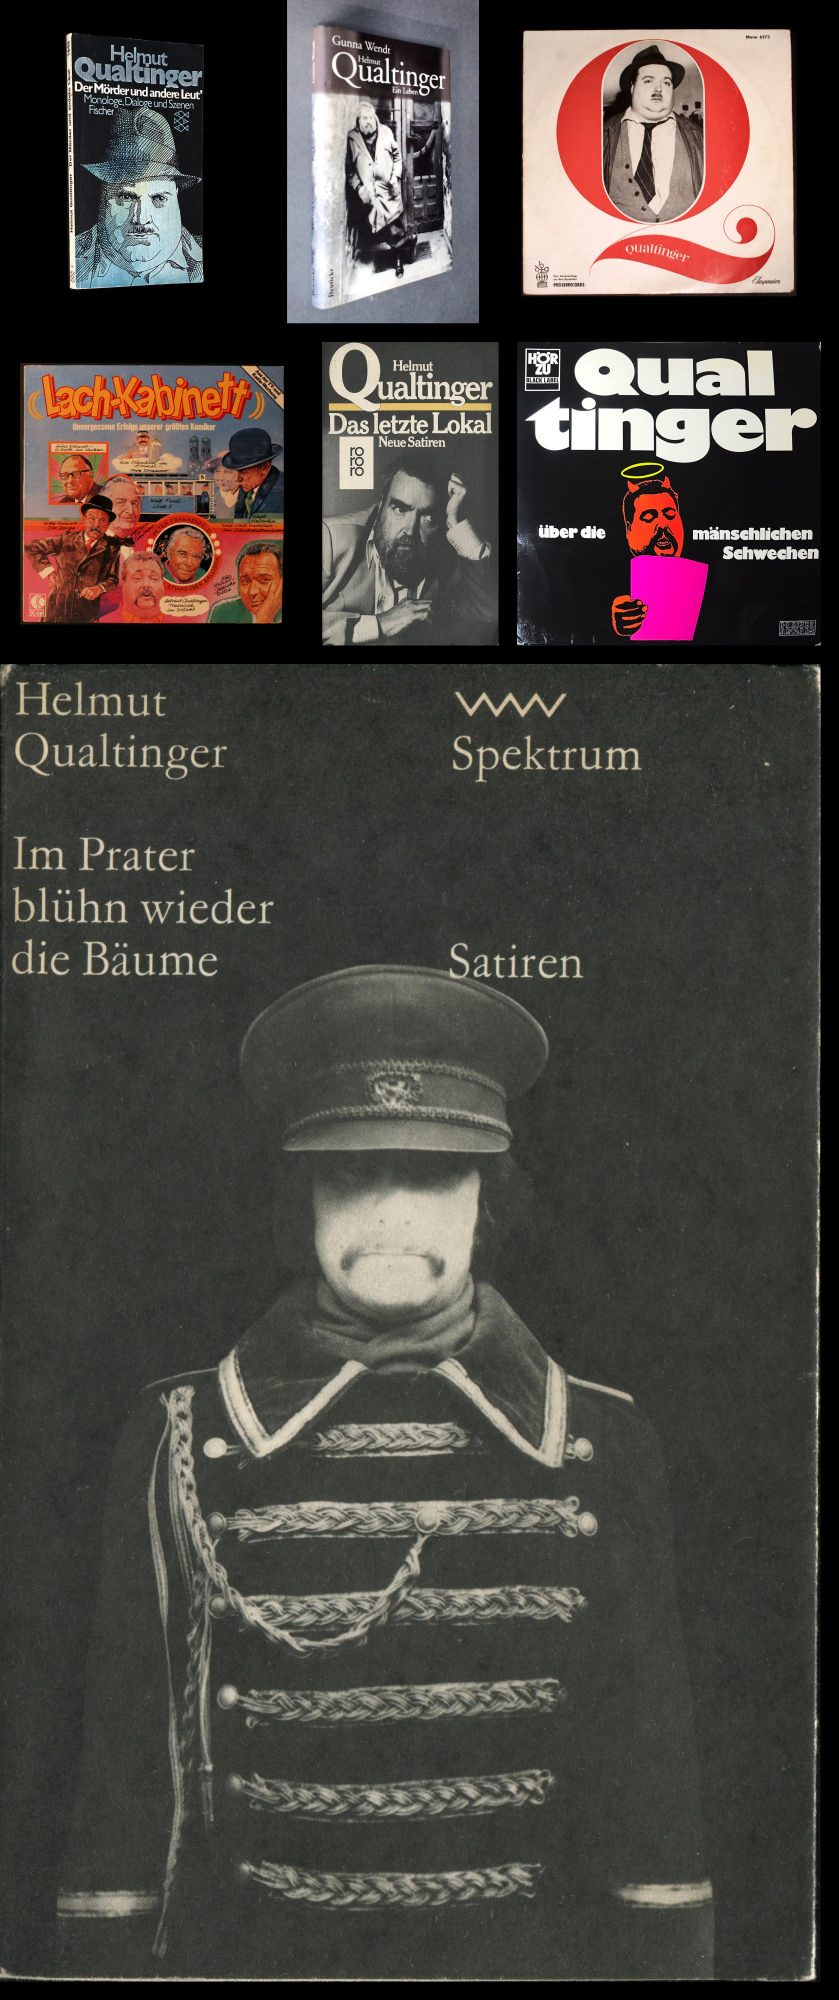 Helmut Qualtinger u.a. 4 Bücher + 3 Vinyl-LPs